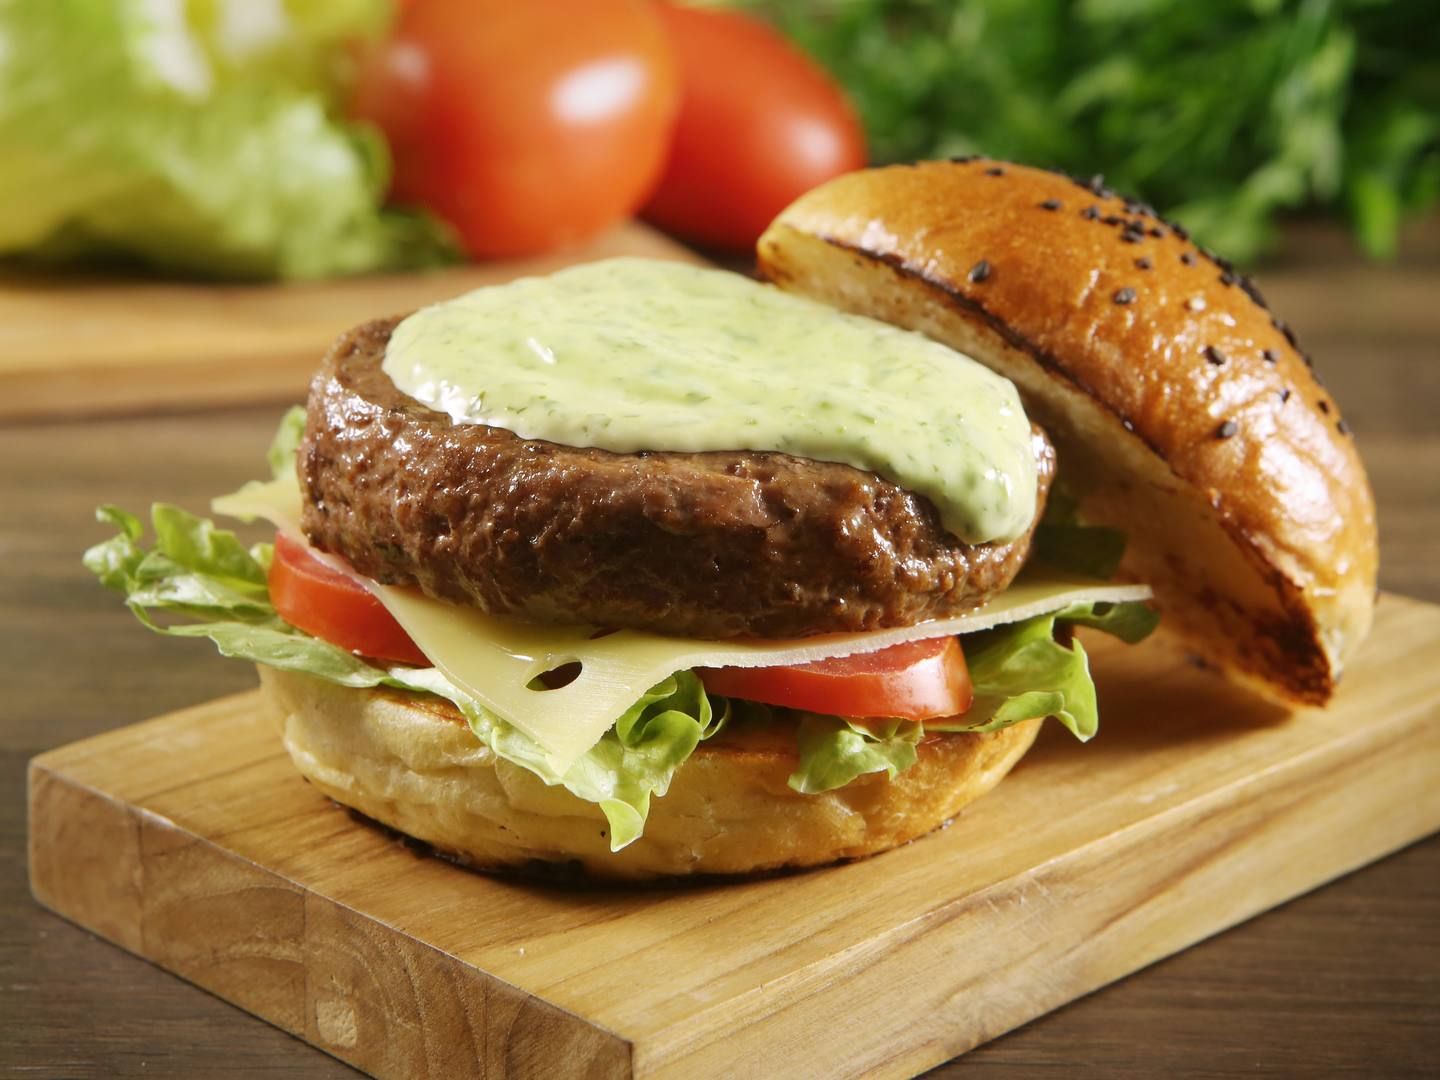 7 maneiras deliciosas de preparar hambúrguer: confira dicas!